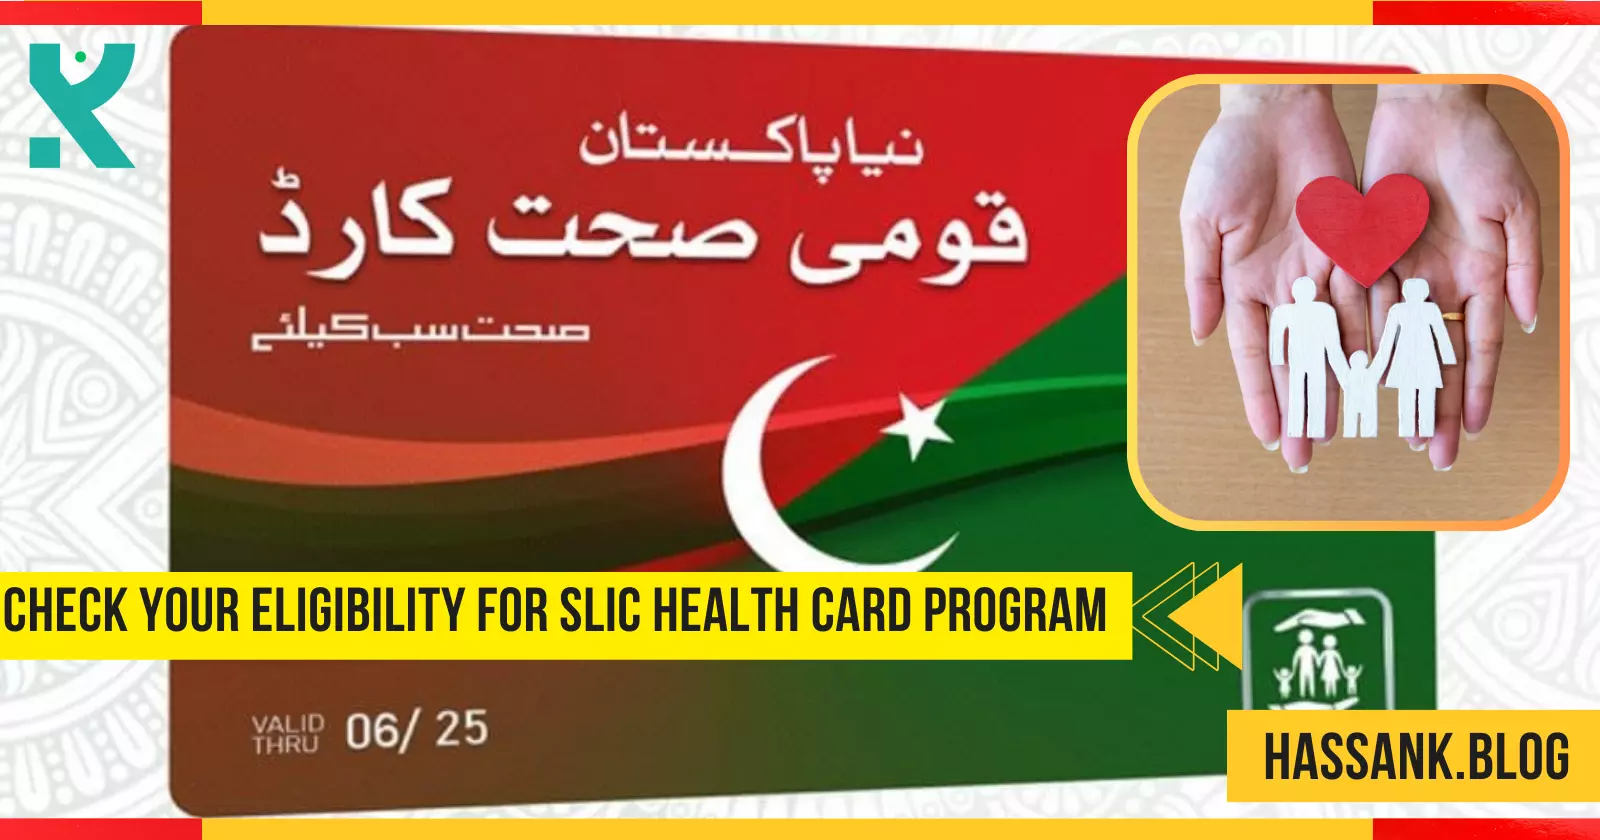 Easily Check Your Eligibility for SLIC Health Card Program